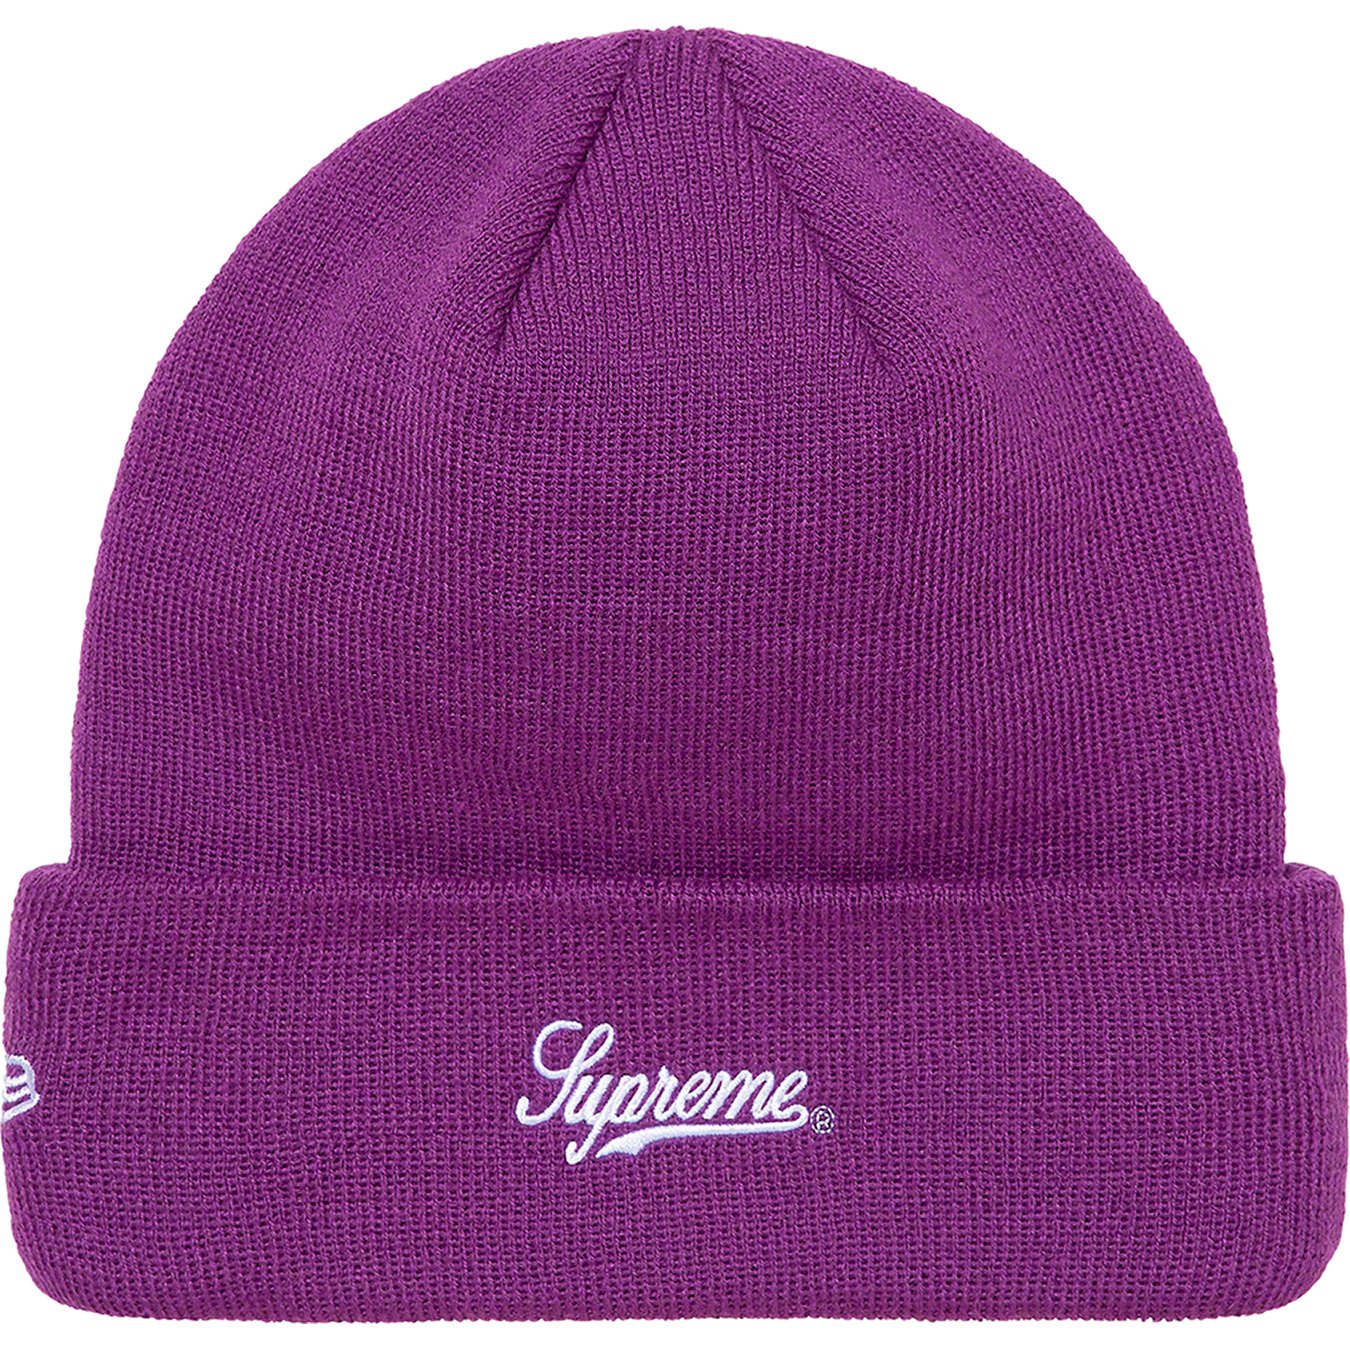 Supreme Beanie New Era Skittles Purple F/W 21' (#8686)